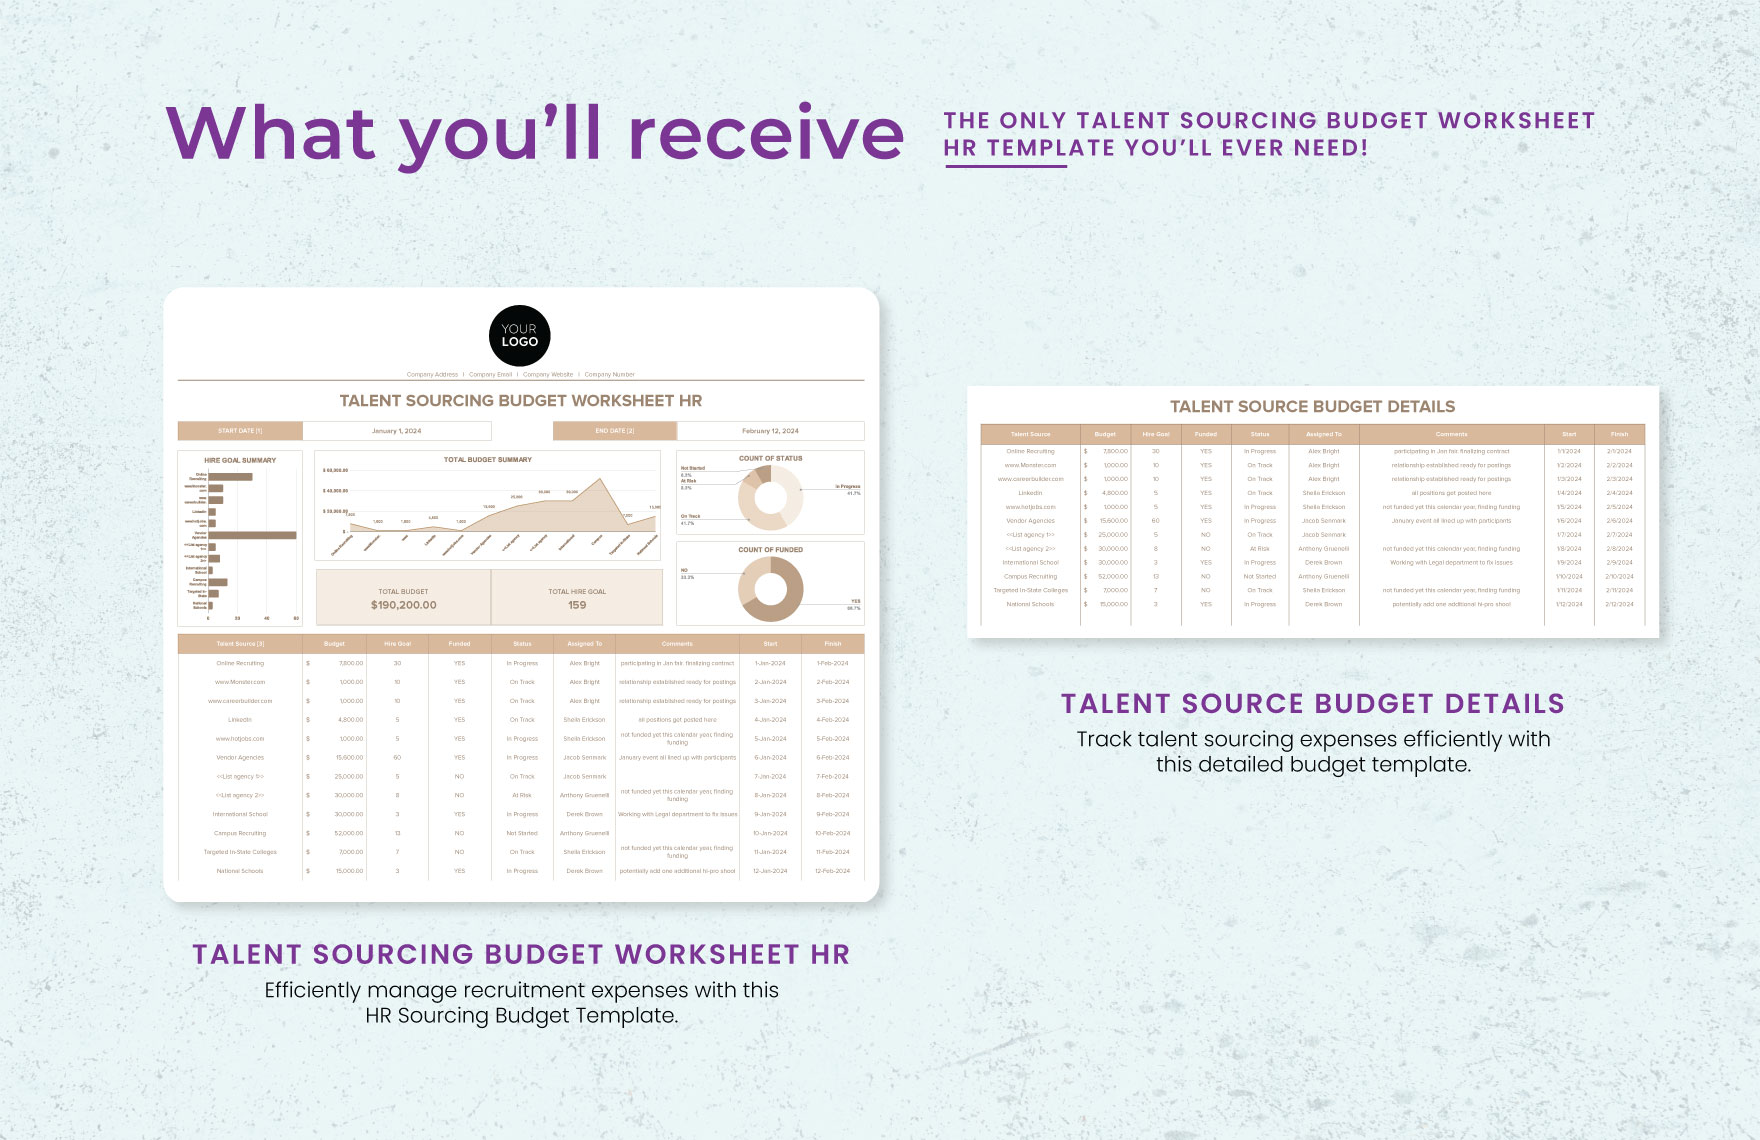 Talent Sourcing Budget Worksheet HR Template